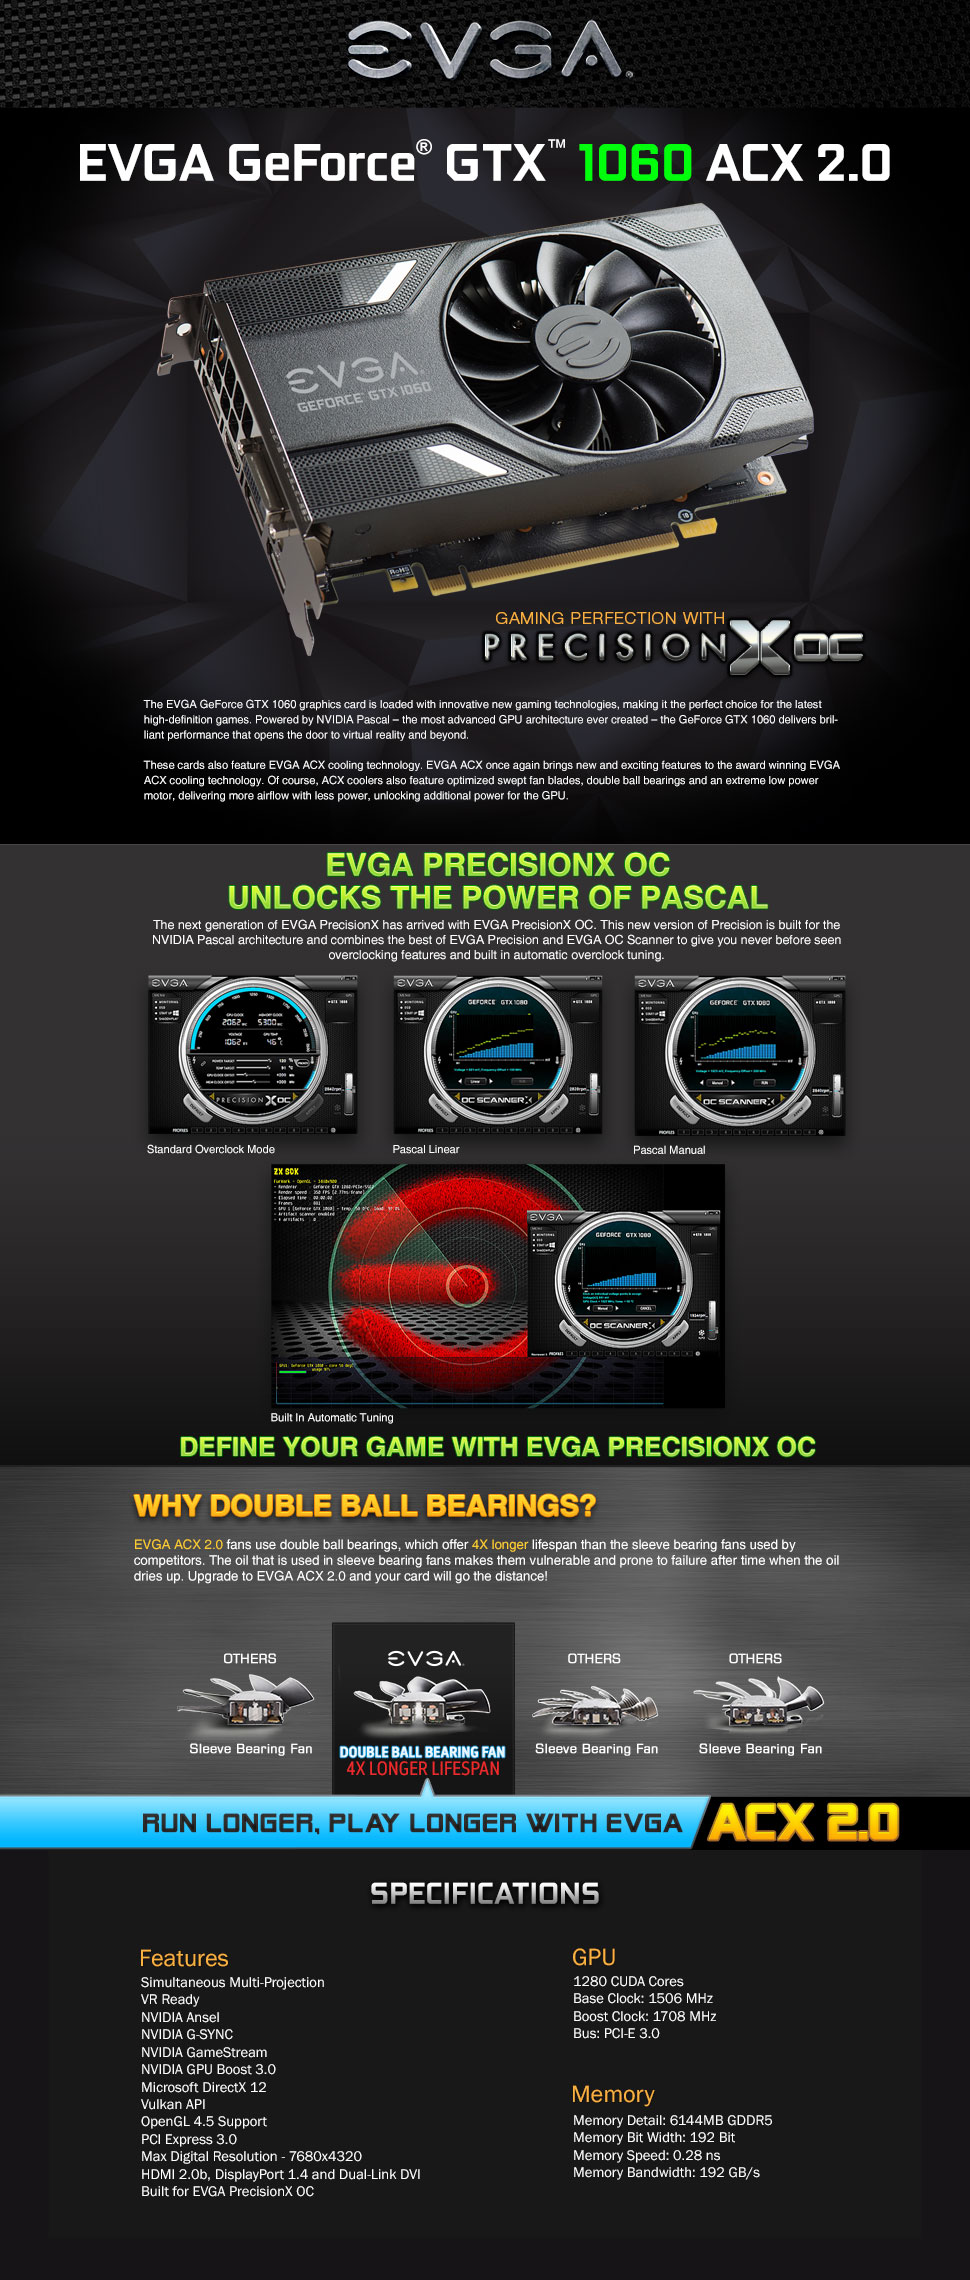 EVGA JP - 製品 - EVGA GeForce GTX 1060 GAMING, 6GB GDDR5, ACX 2.0 Fan) -